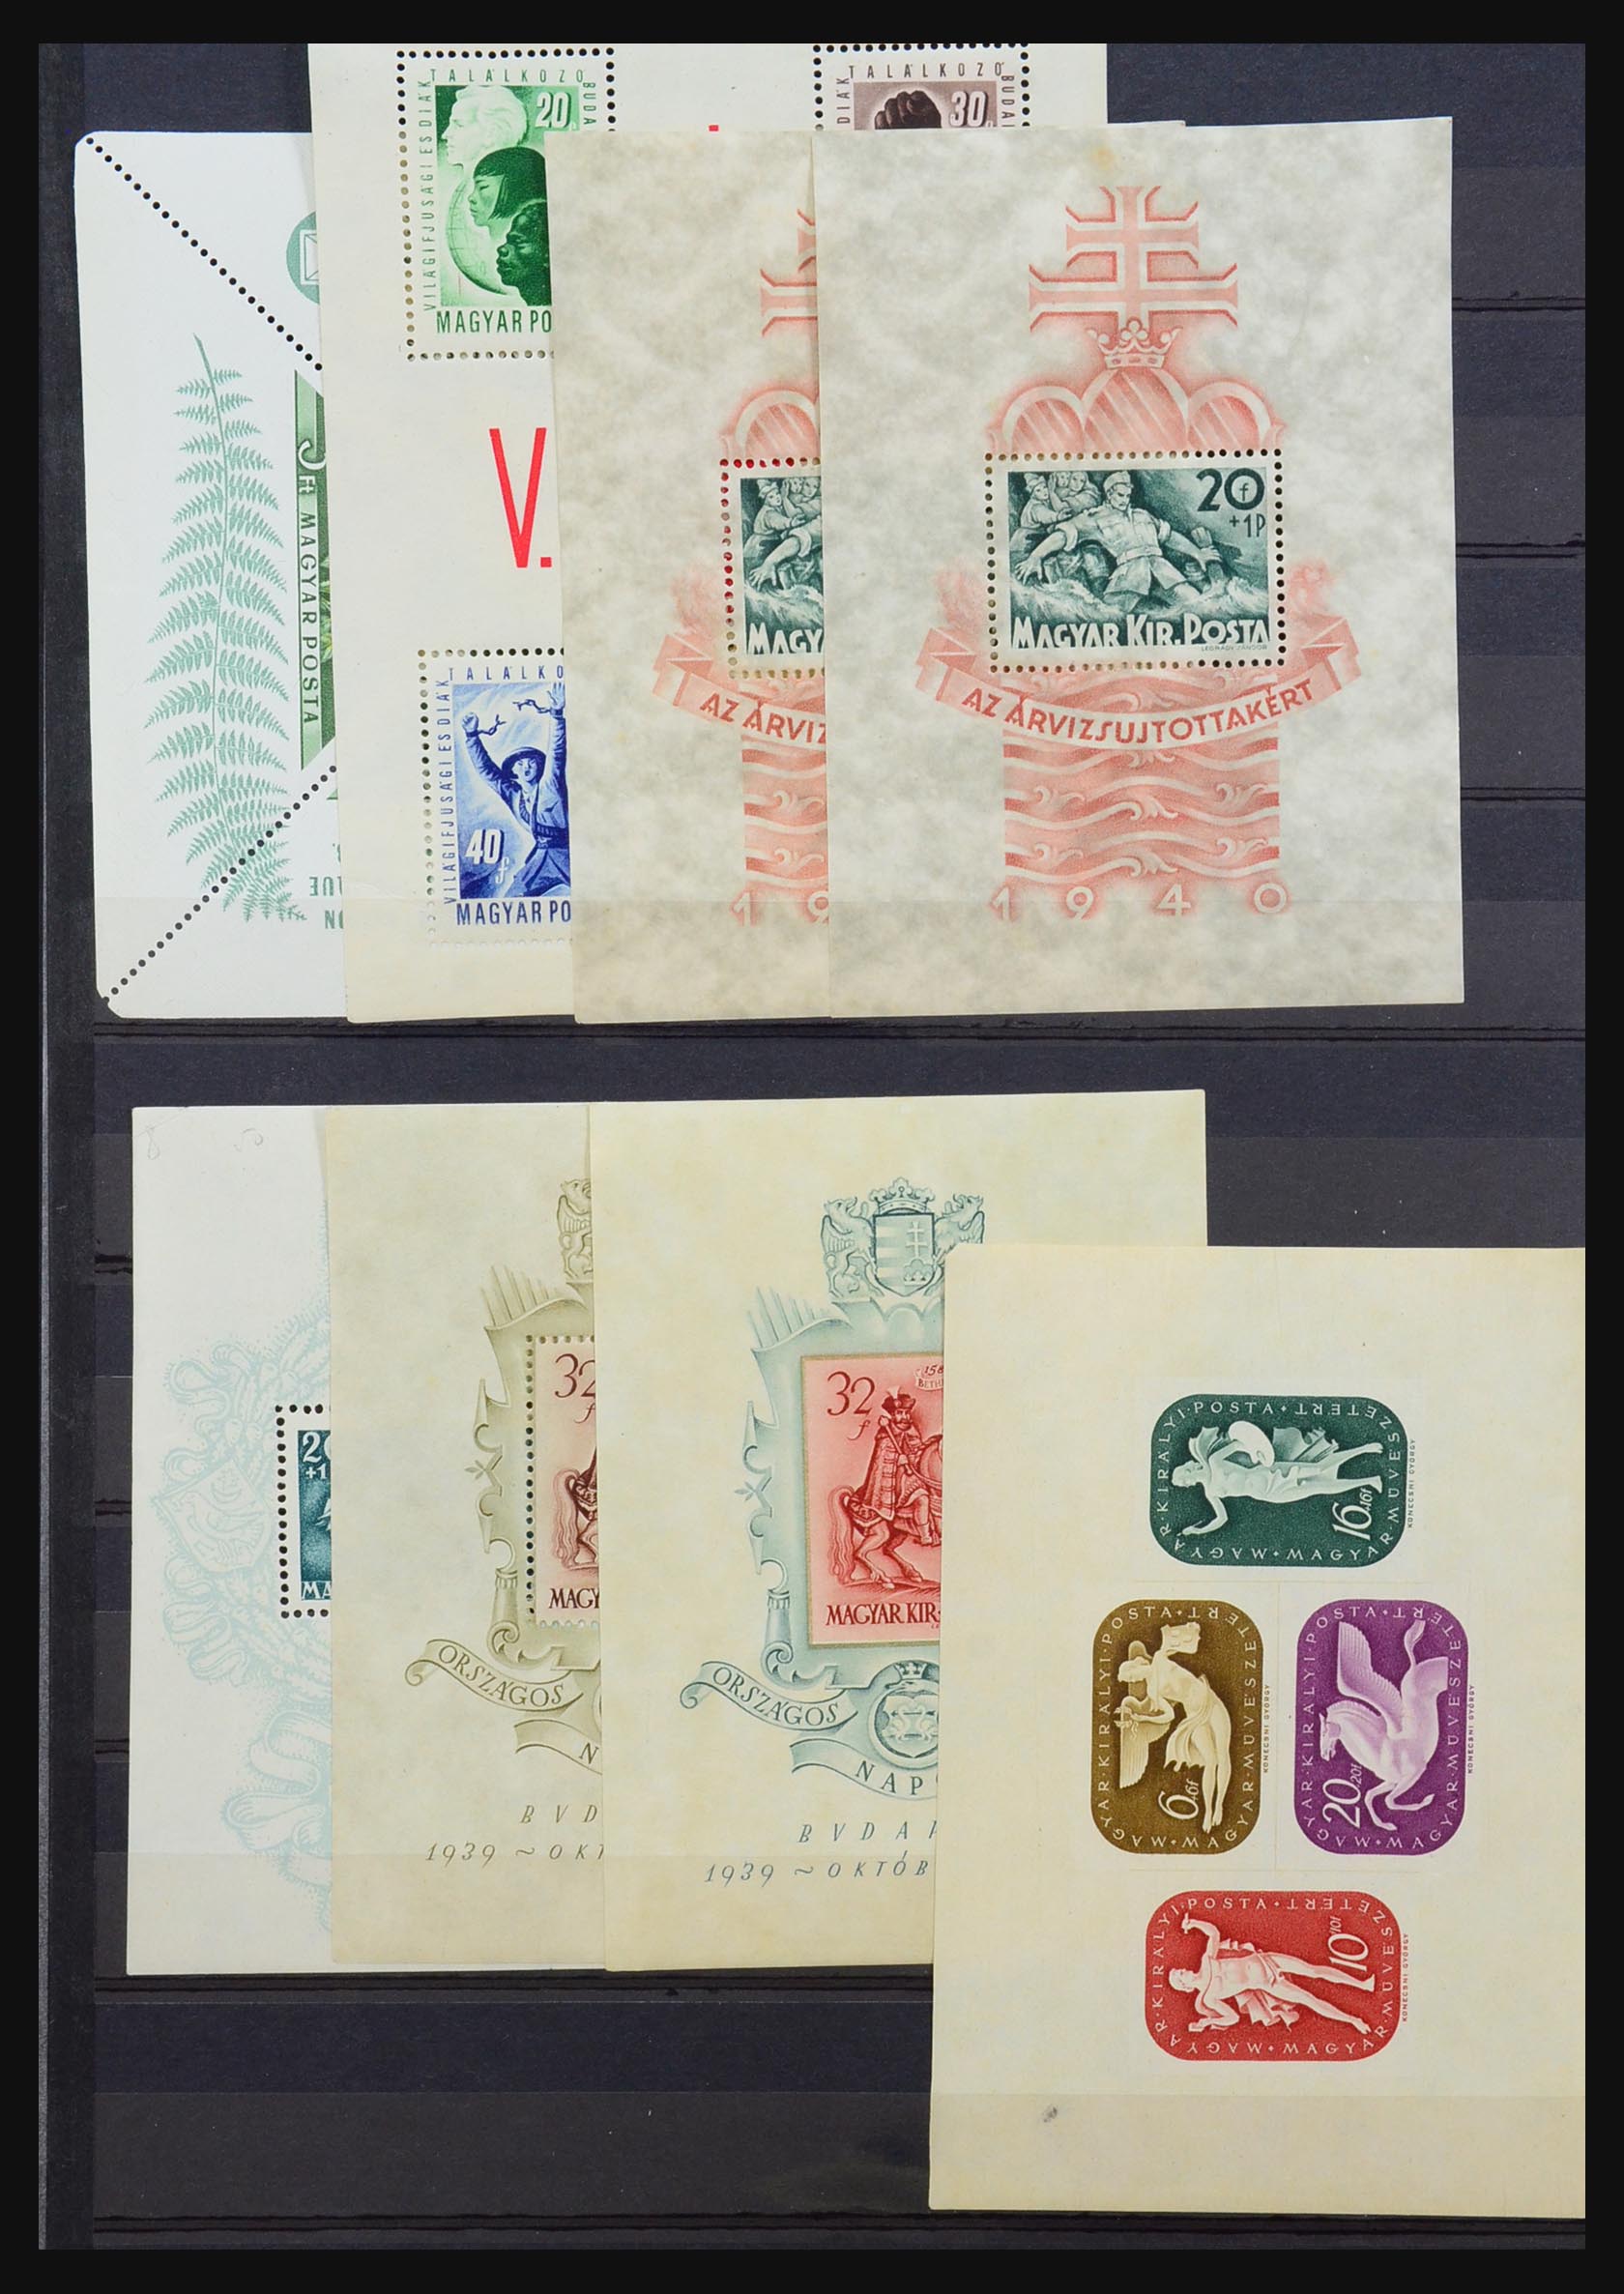 31524 029 - 31524 World souvenir sheets 1937-1985.